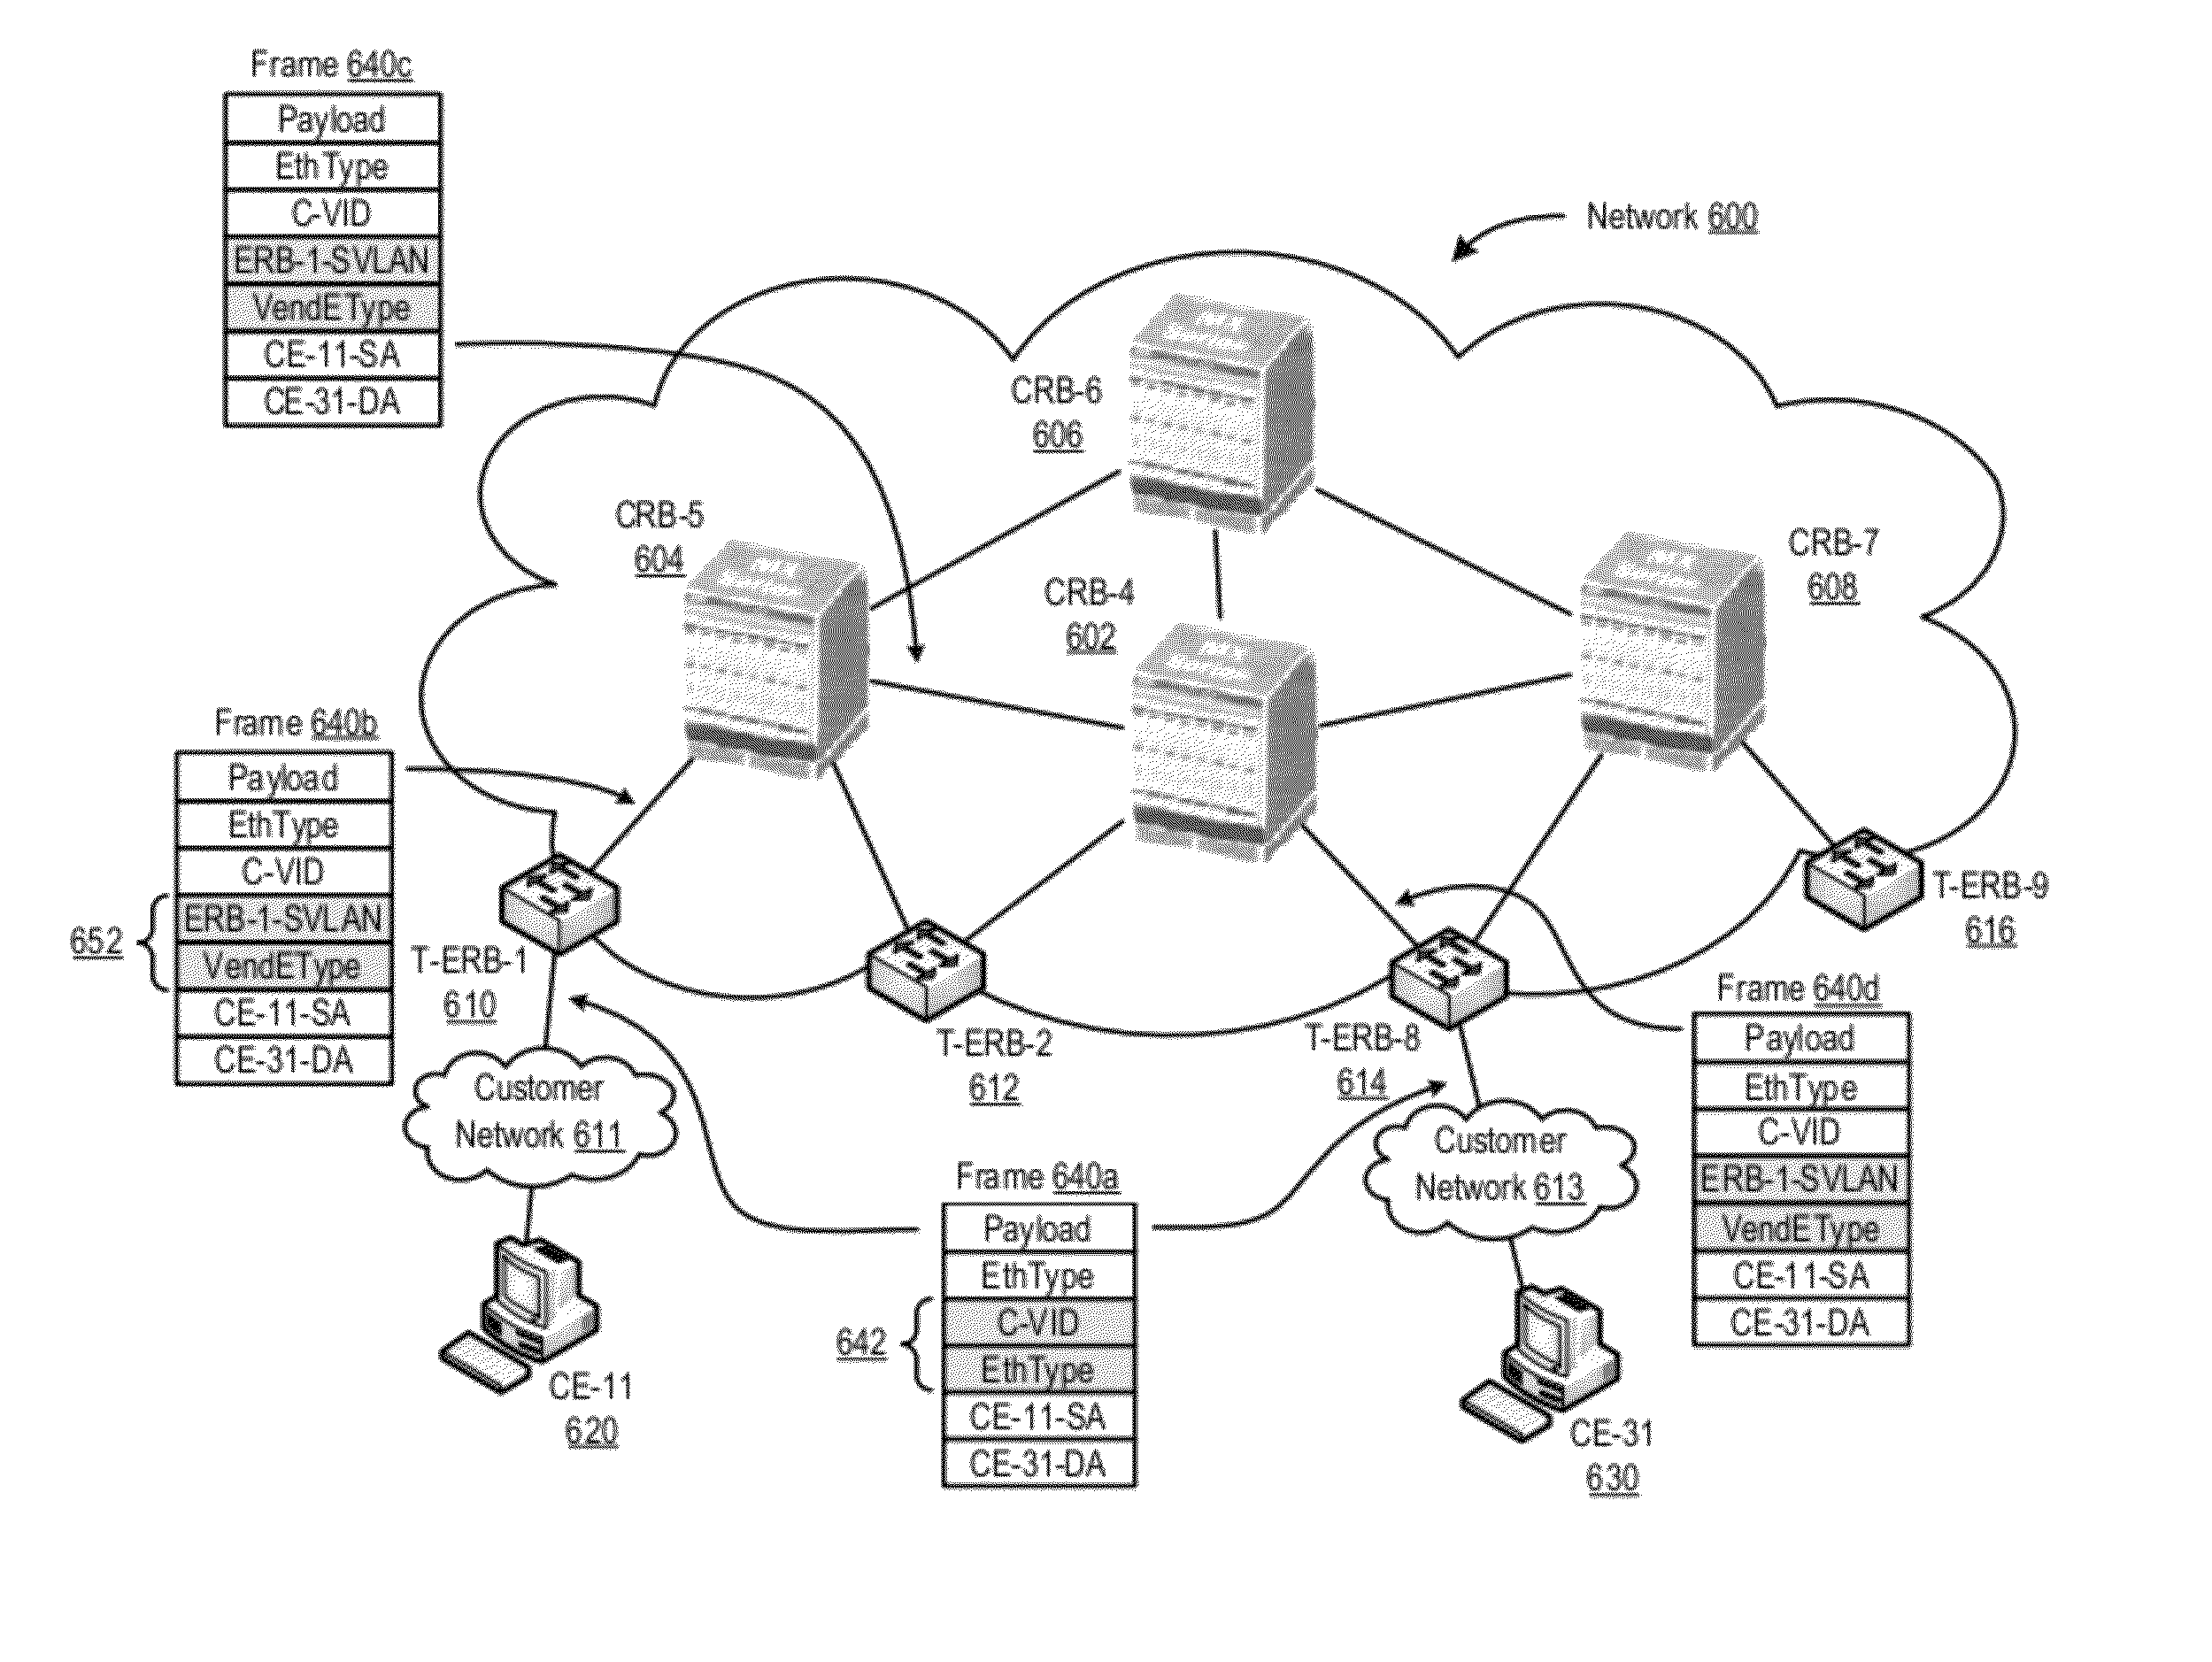 Forwarding frames in a computer network using shortest path bridging